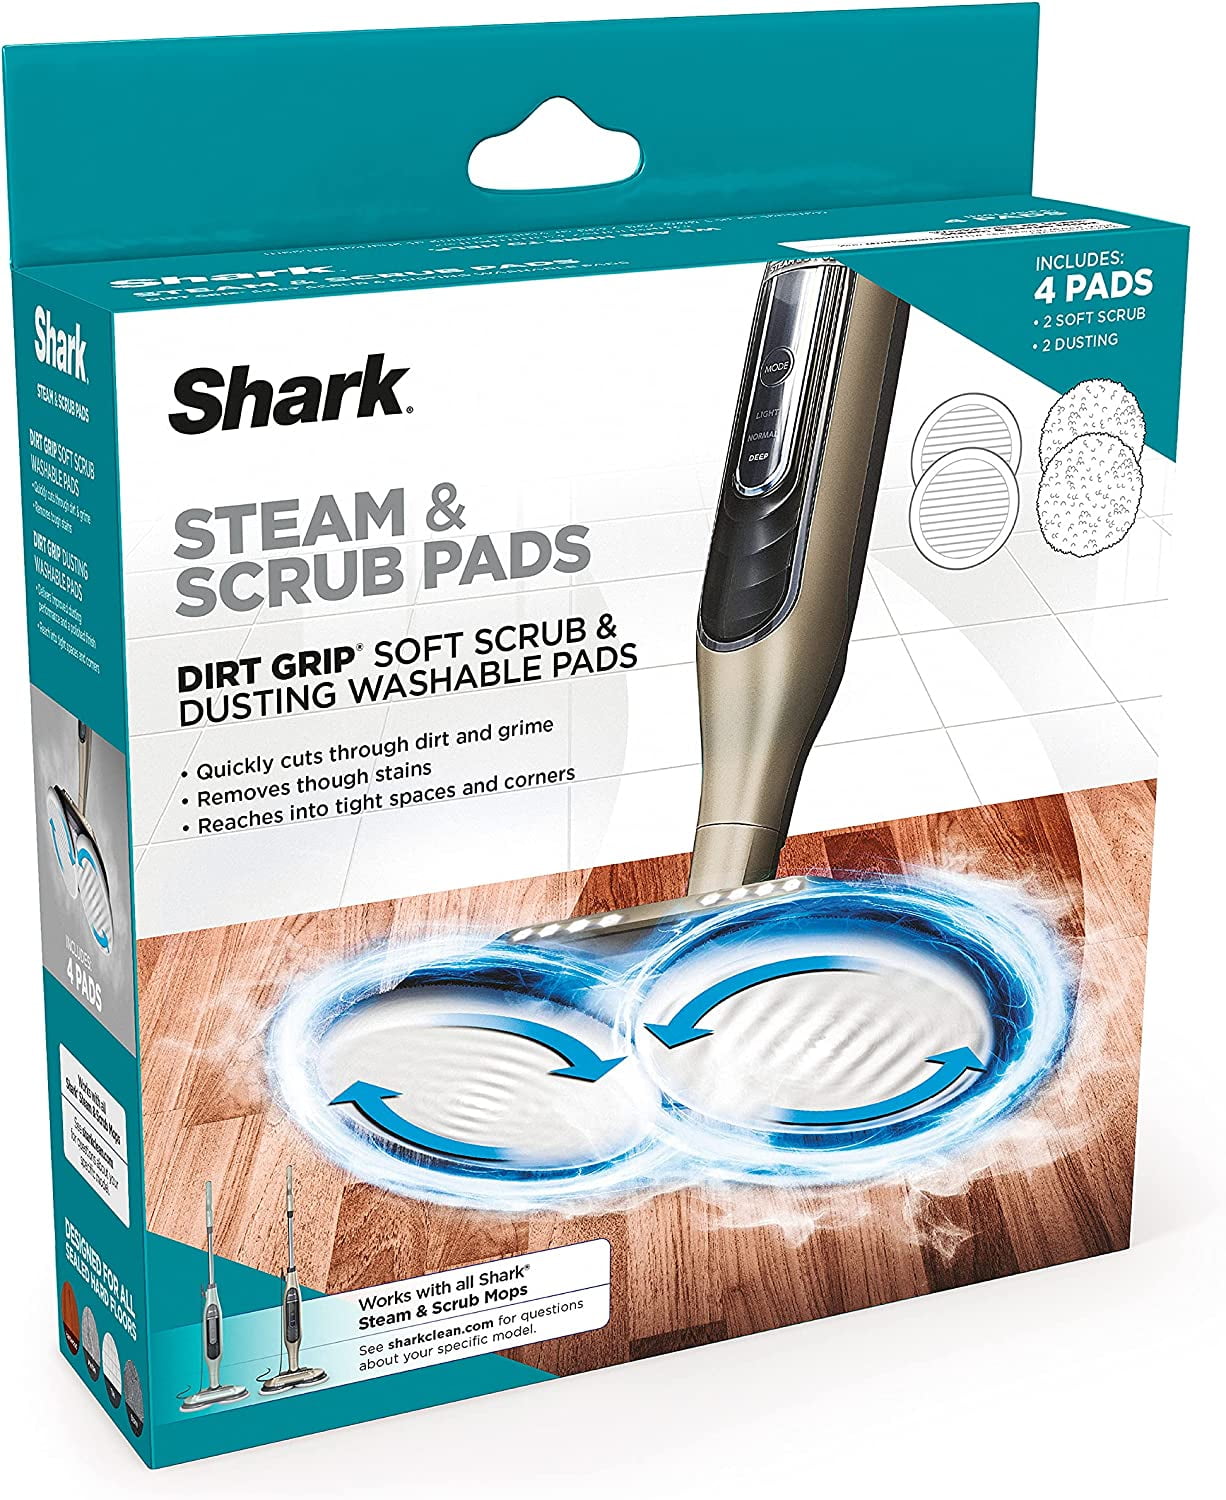 Shark Steam & Scrub Dirt Grip Soft Scrub & Dusting Washable Pads XKITP7000D, Compatible with S7000 Shark Steam & Scrub